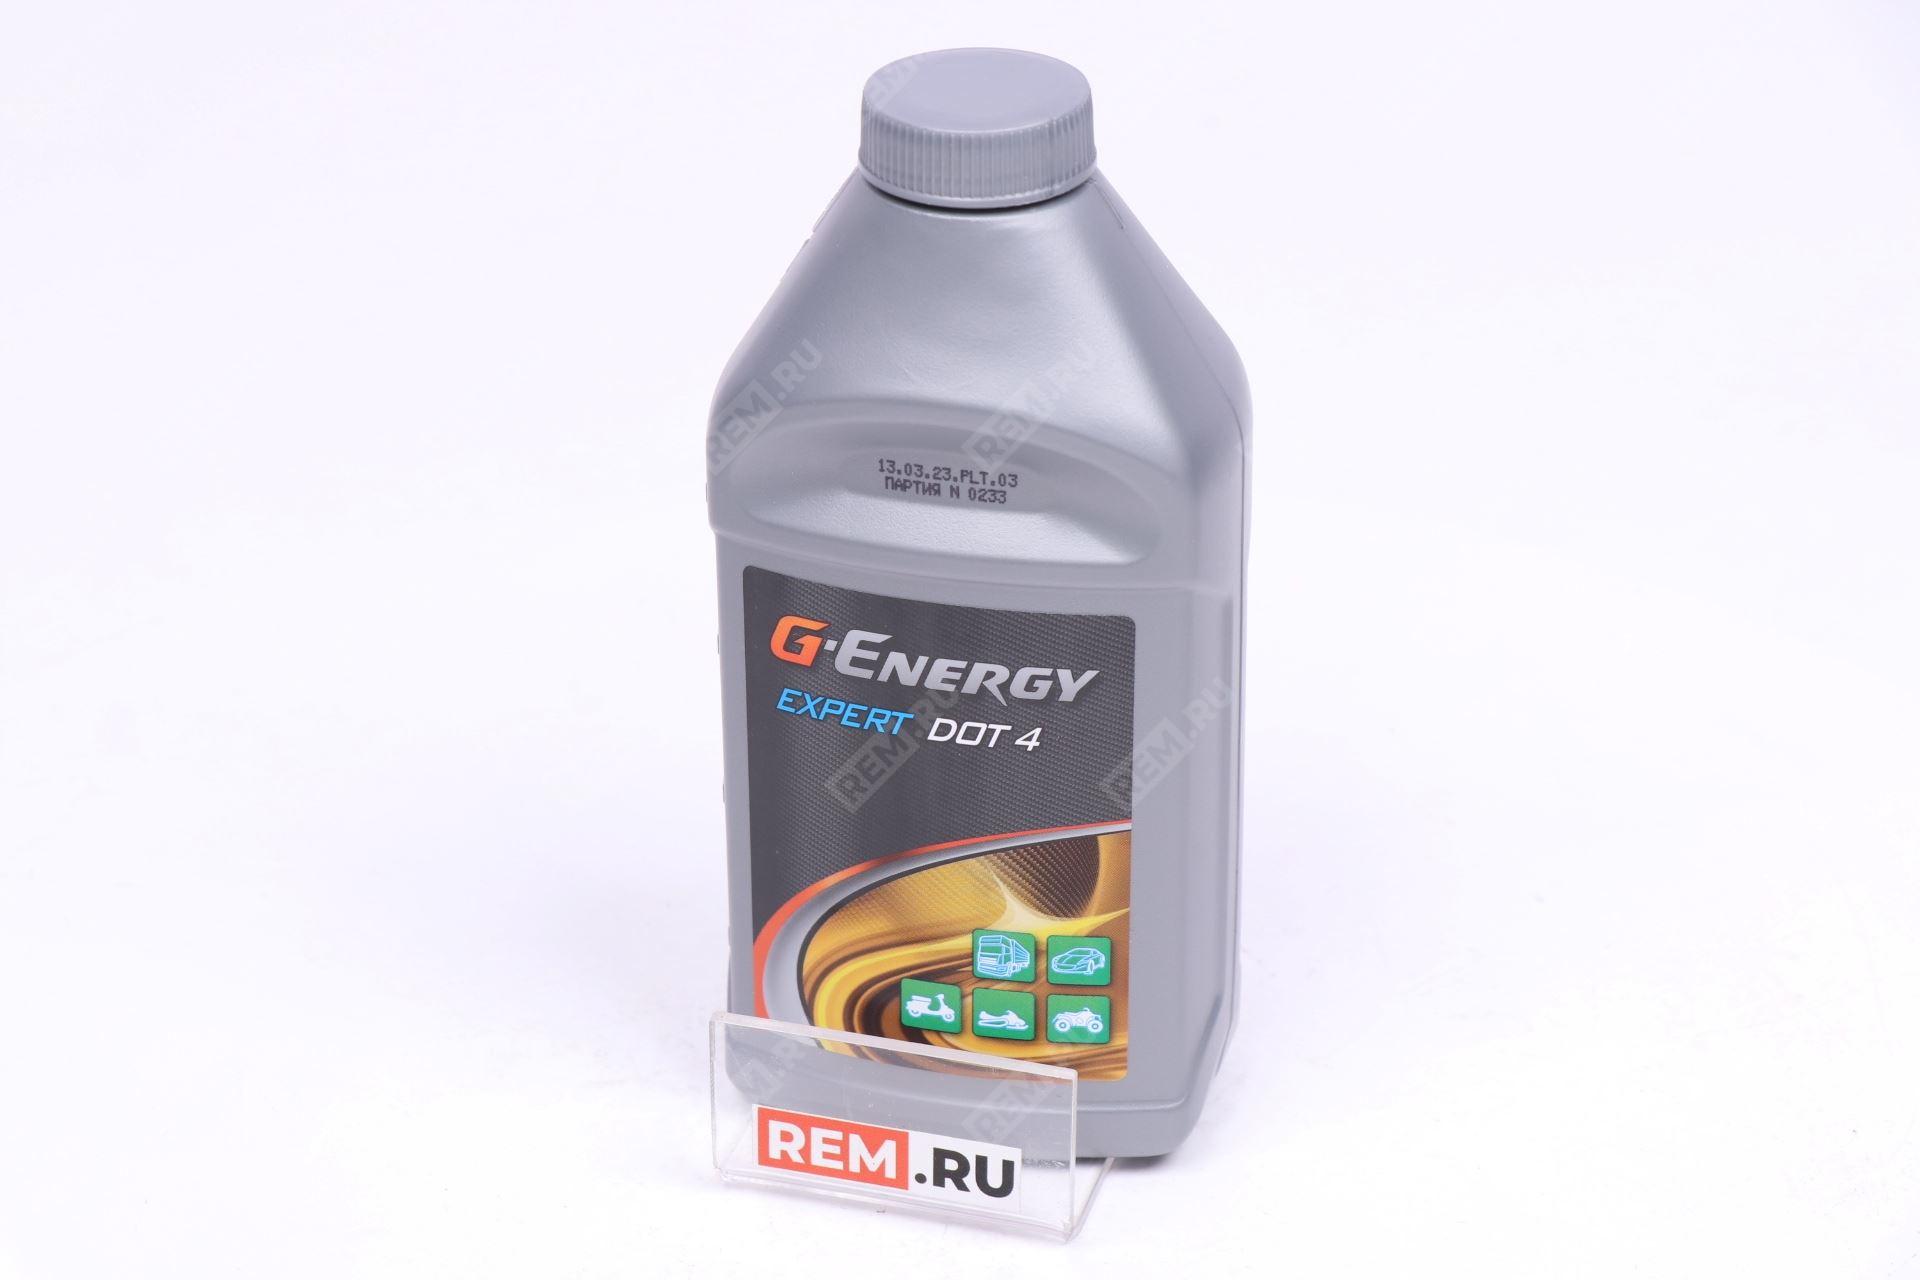  G-MOTION_DOT4 жидкость тормозная g-energy expert dot 4, 0.45кг